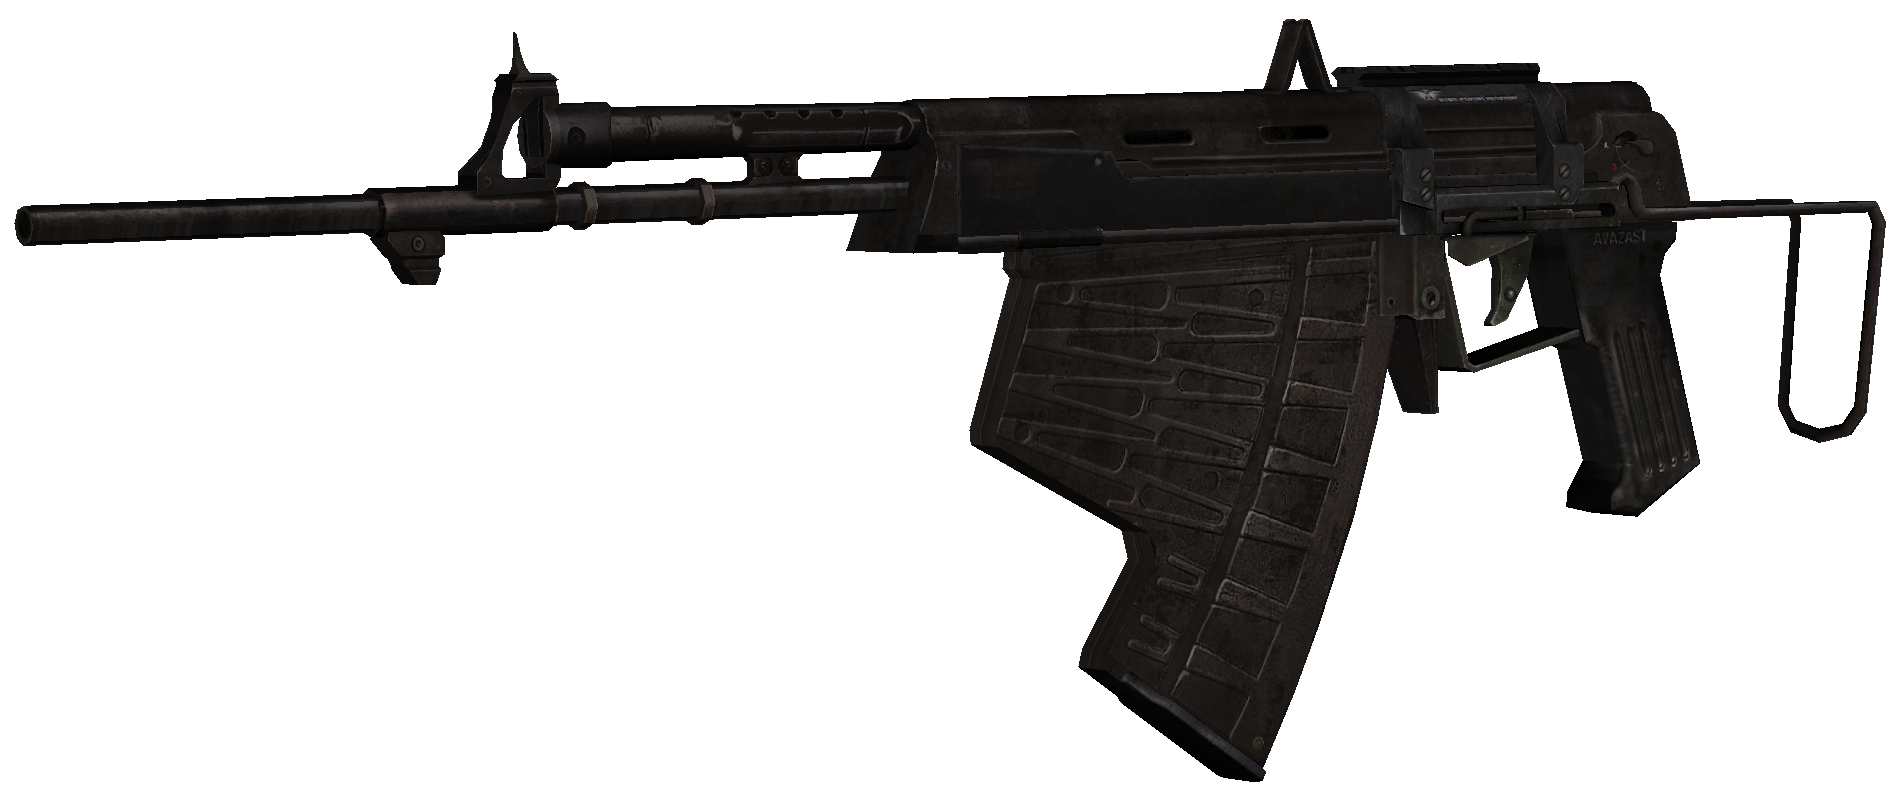 Scythe (melee weapon), Call of Duty Wiki